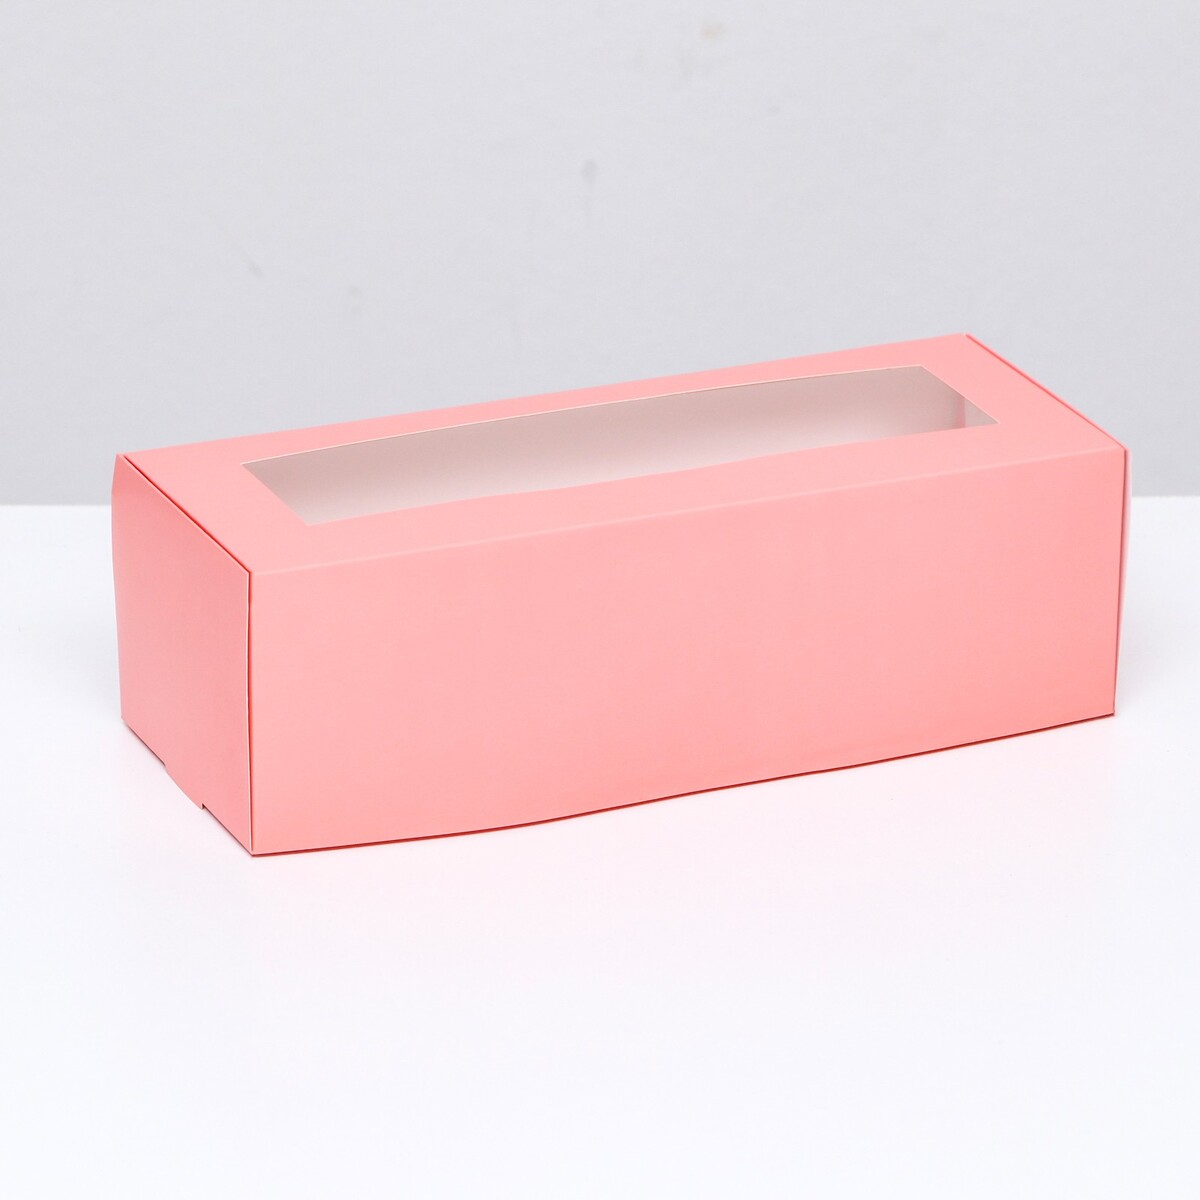 Коробка складная с окном под рулет, розовая, 26 х 10 х 8 см коробка под рулет белая 18 5 х 6 5 х 6 5 см